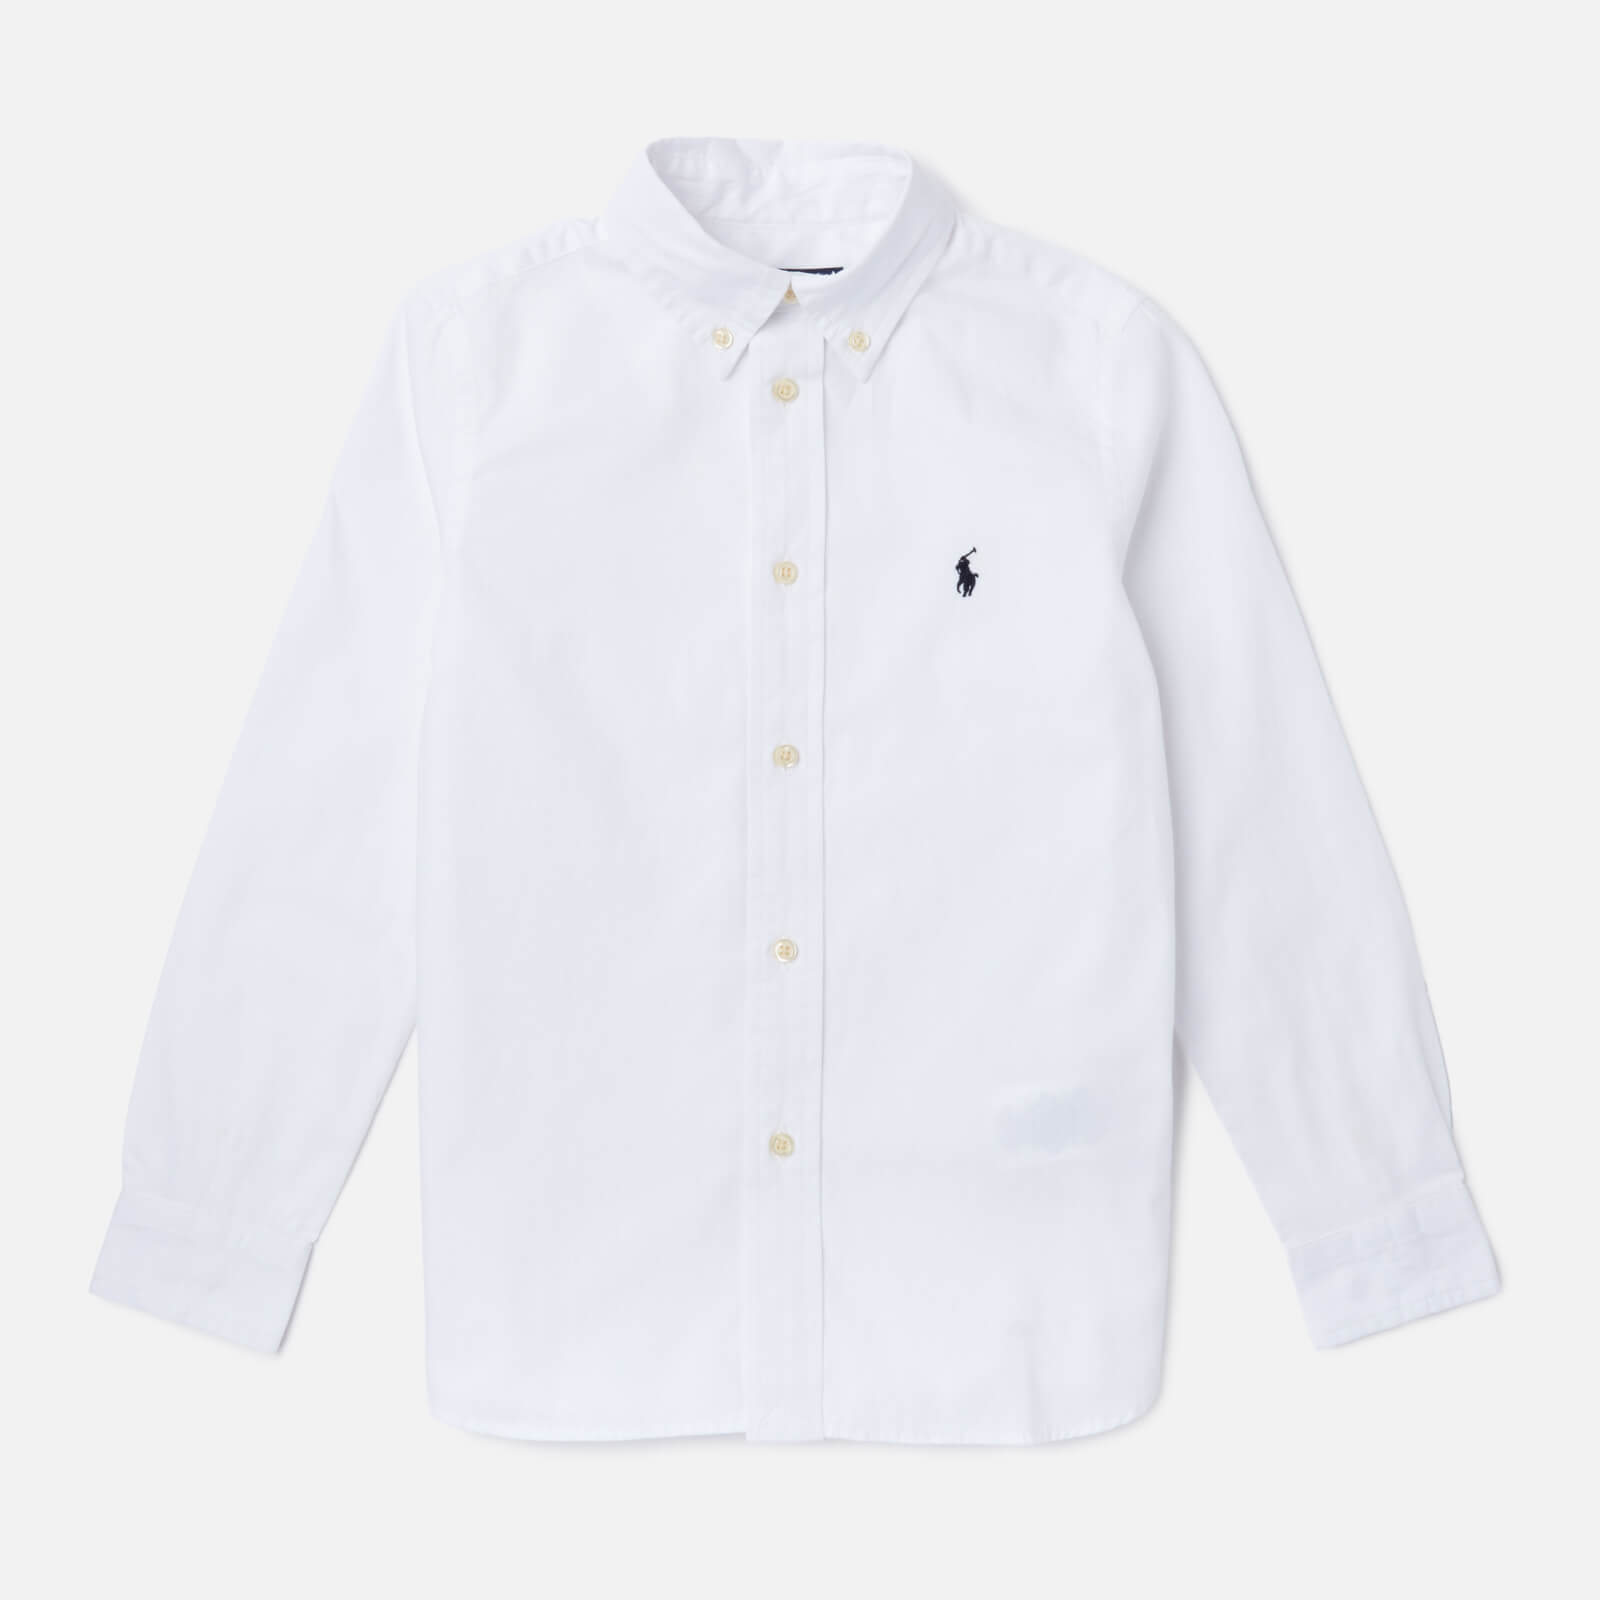 Polo Ralph Lauren Boys' Long Sleeve Shirt - White - 6 Years